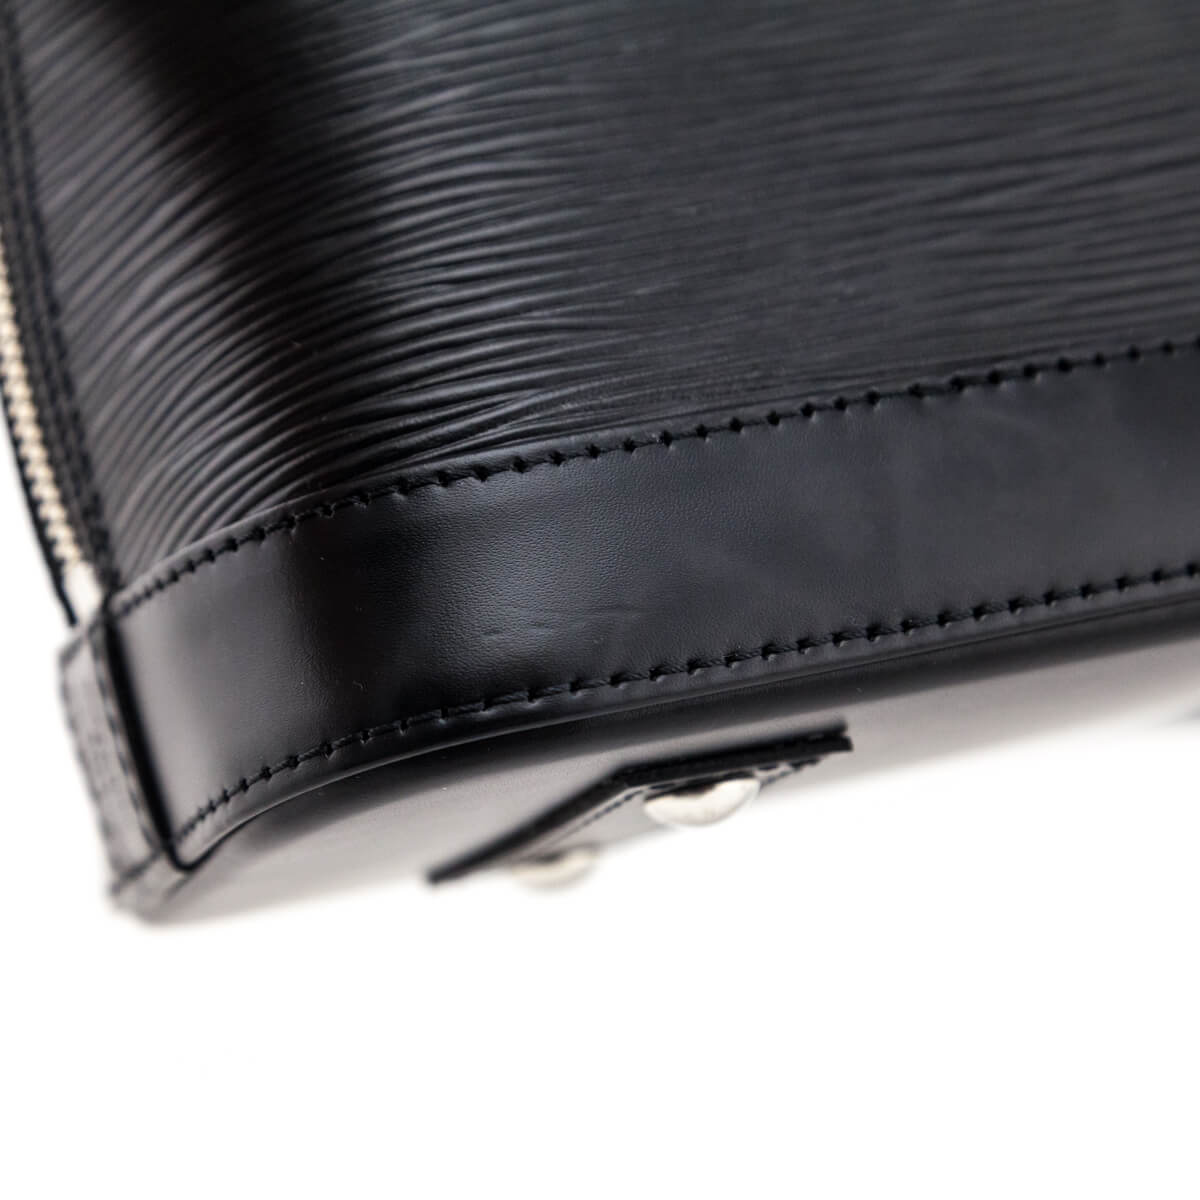 Black Alma Bb Epi Louis Vuitton Bags, Peplum Dress by quennandher